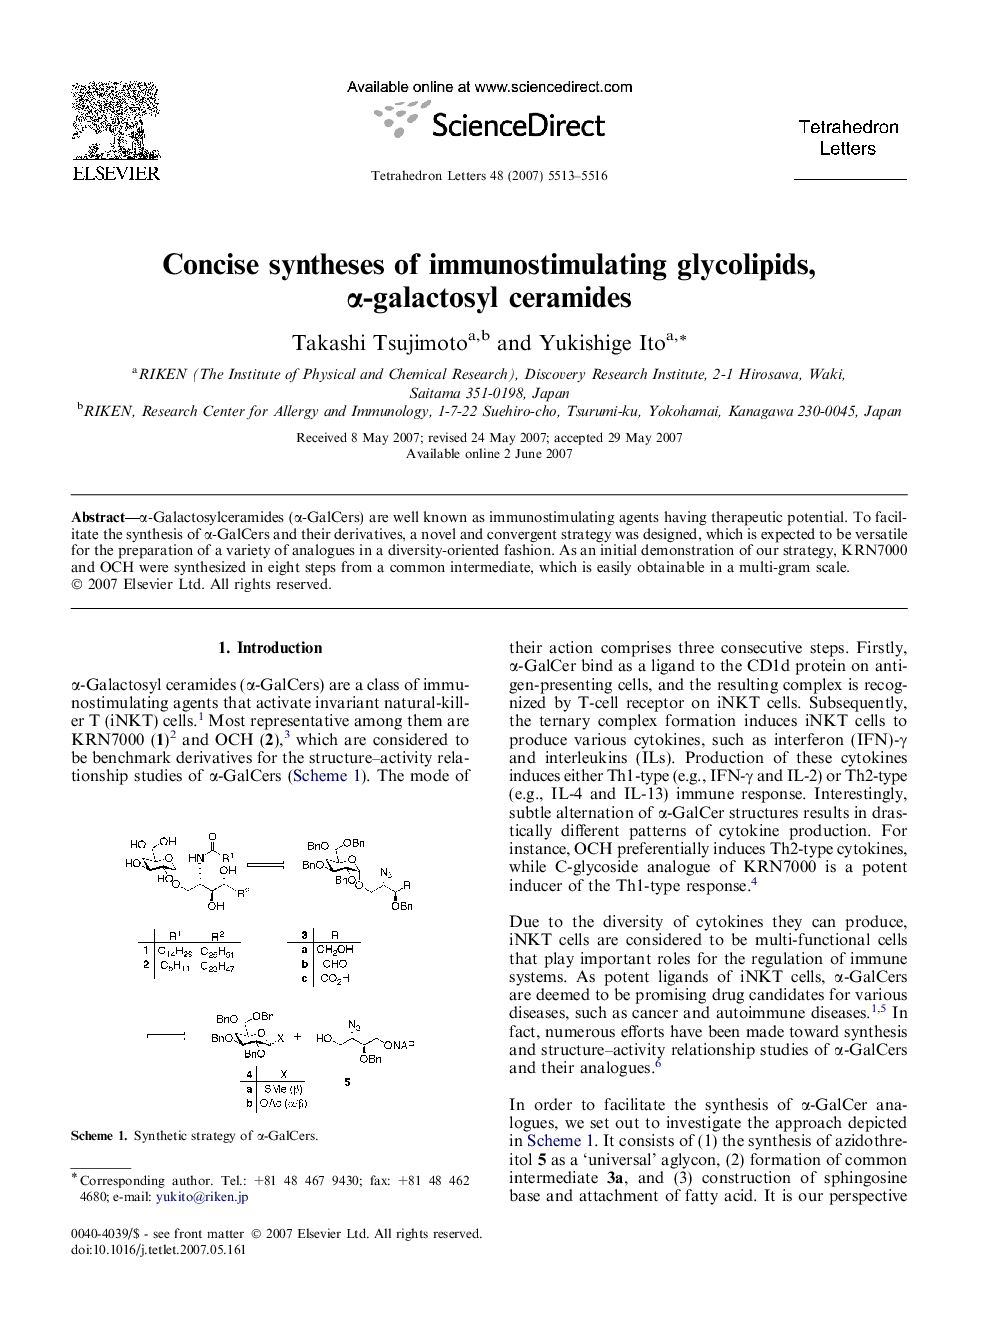 Concise syntheses of immunostimulating glycolipids, Î±-galactosyl ceramides